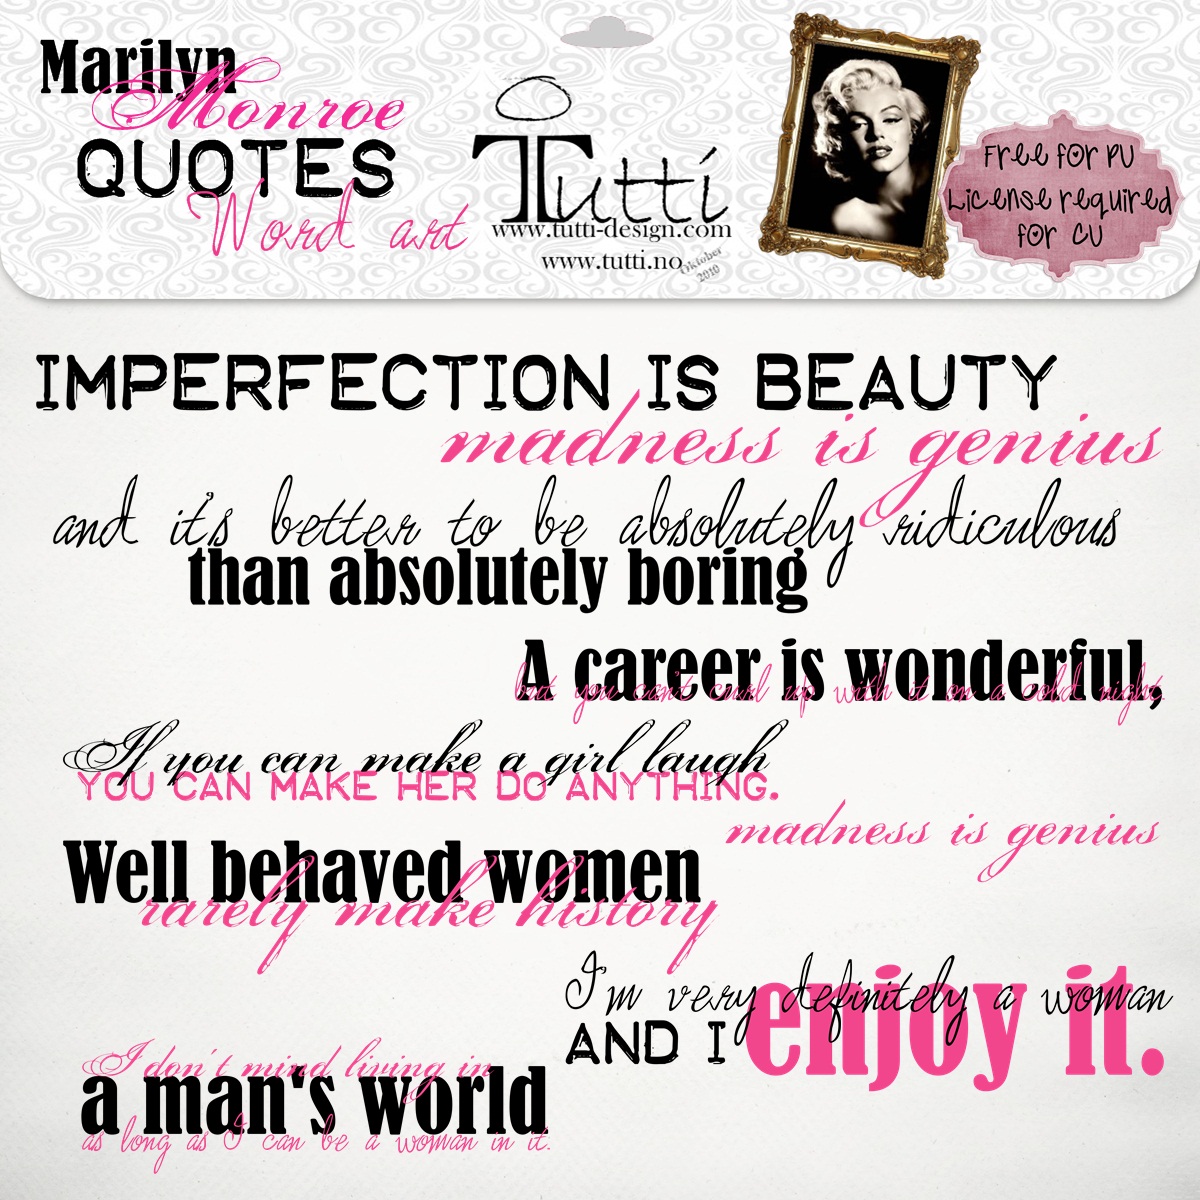 http://2.bp.blogspot.com/_PGPWKMtfat0/TTZGmrO7oKI/AAAAAAAABJA/75CDqMSD4CM/s1600/Marilyn_Monroe_quotes_word_art.jpg